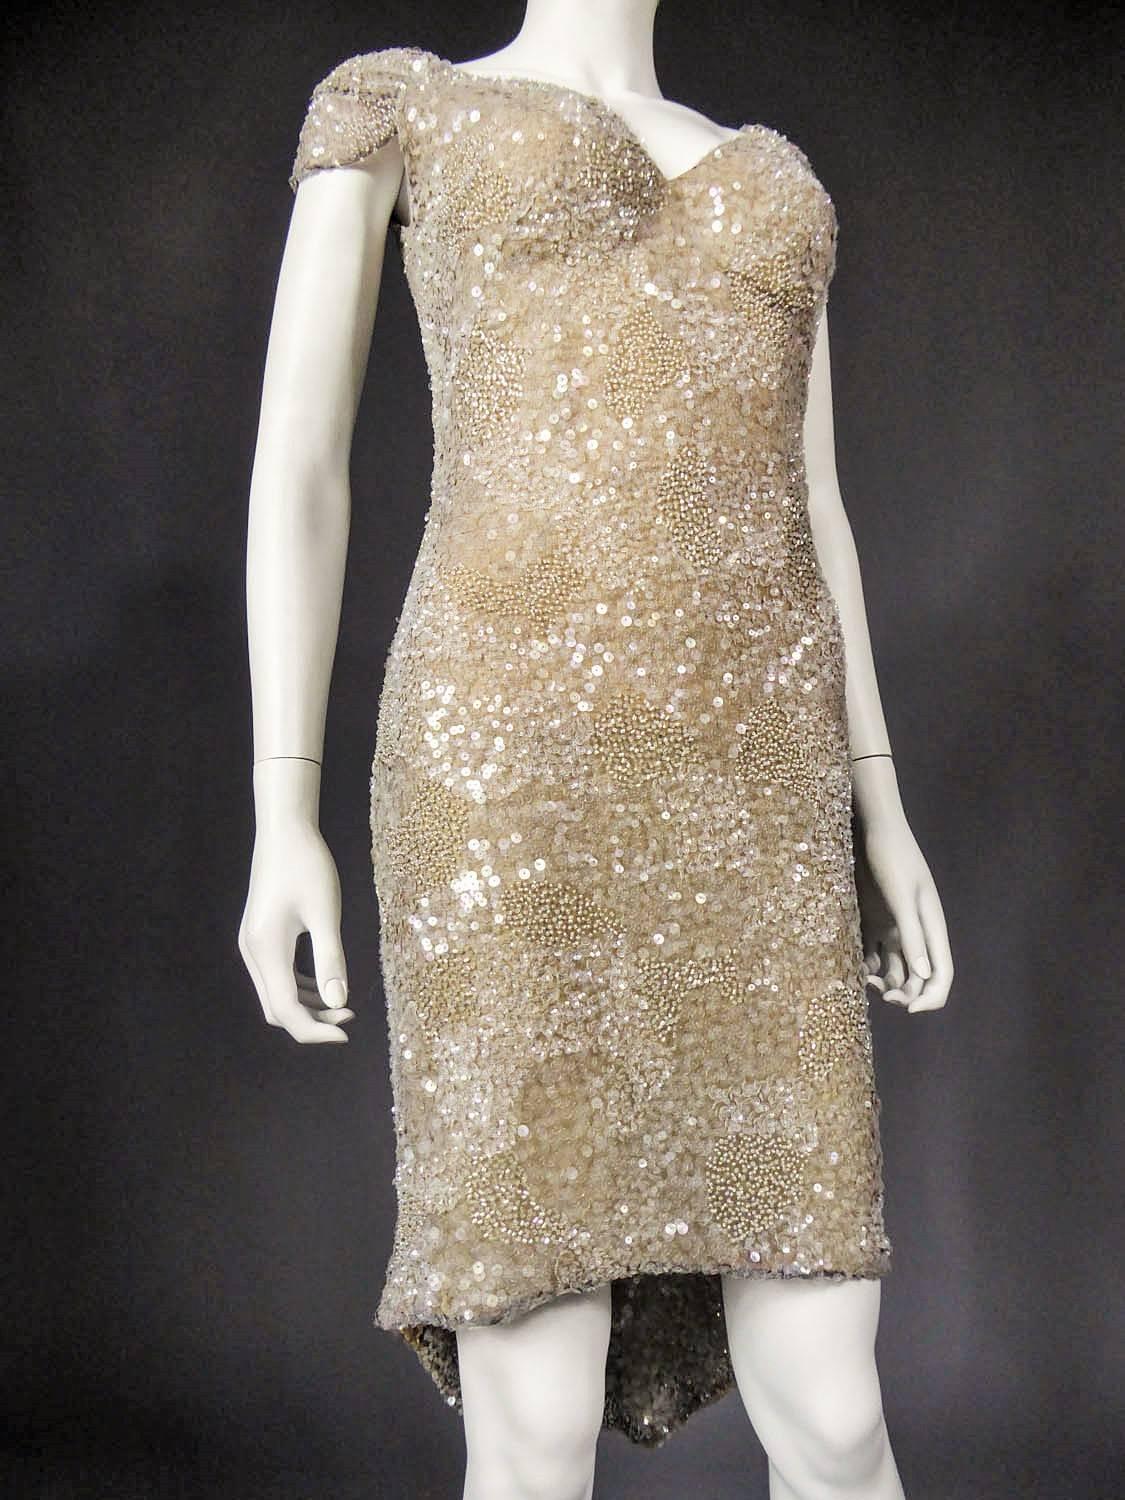 Brown Christian Dior John Galliano Couture sequin Dress - Circa 2000